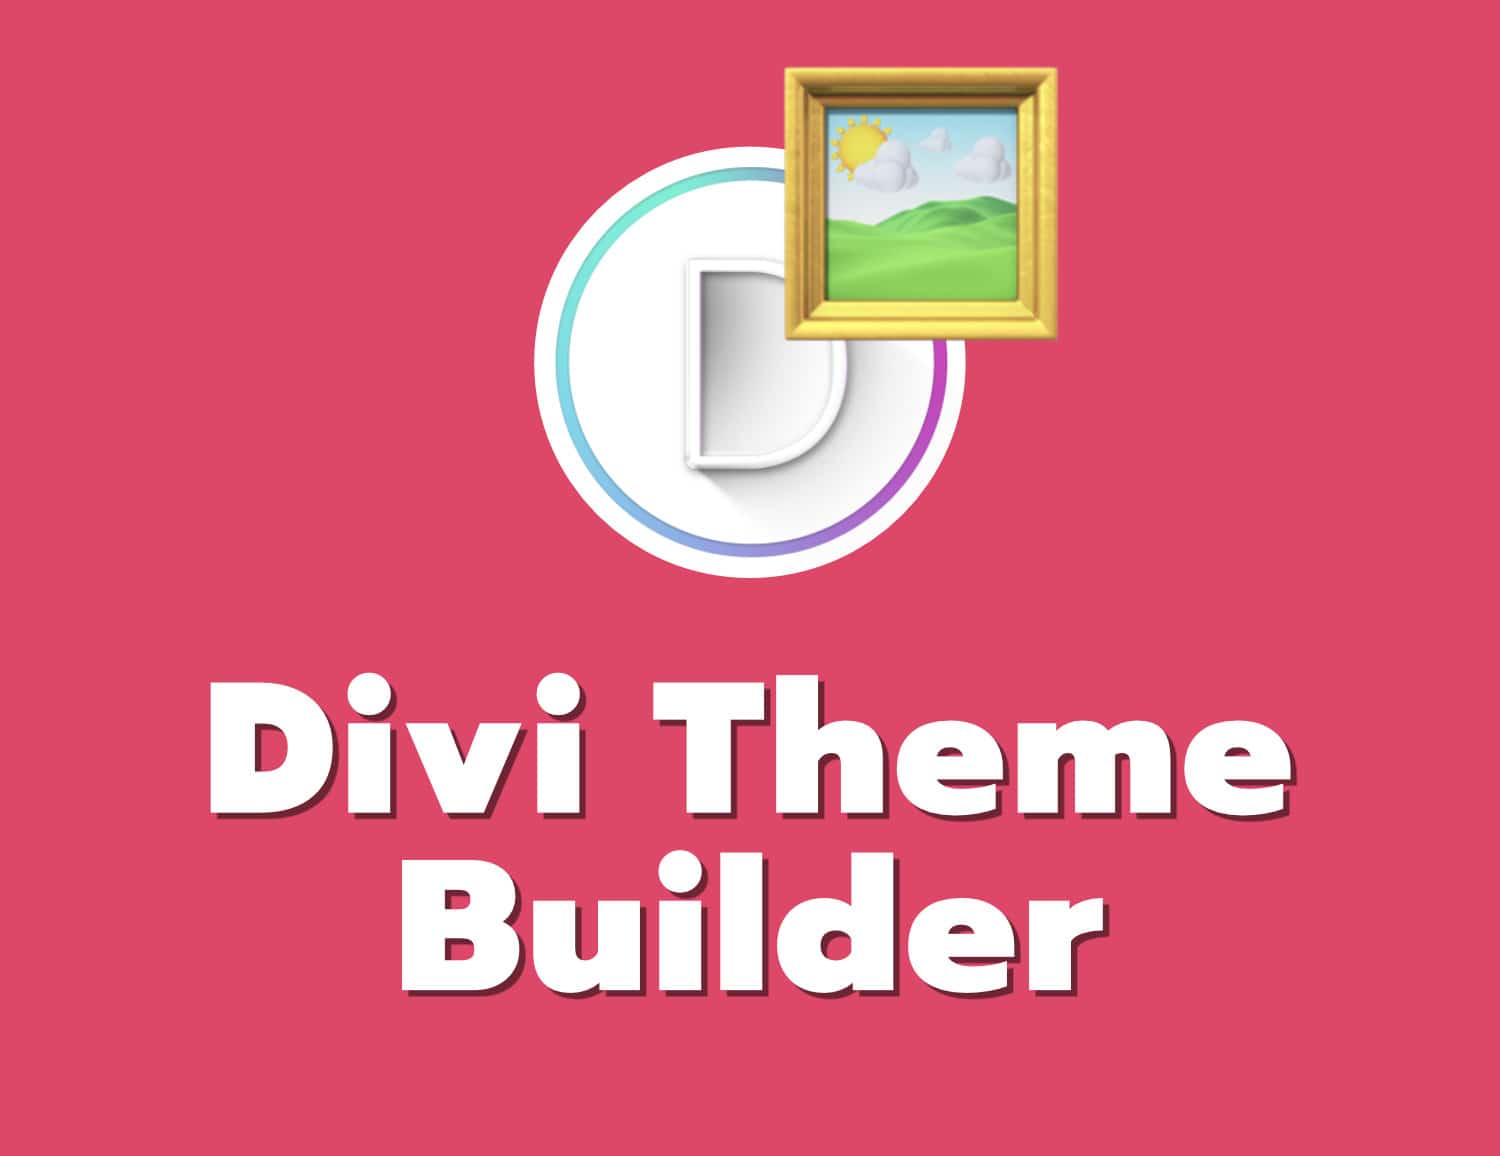 divi theme builer light